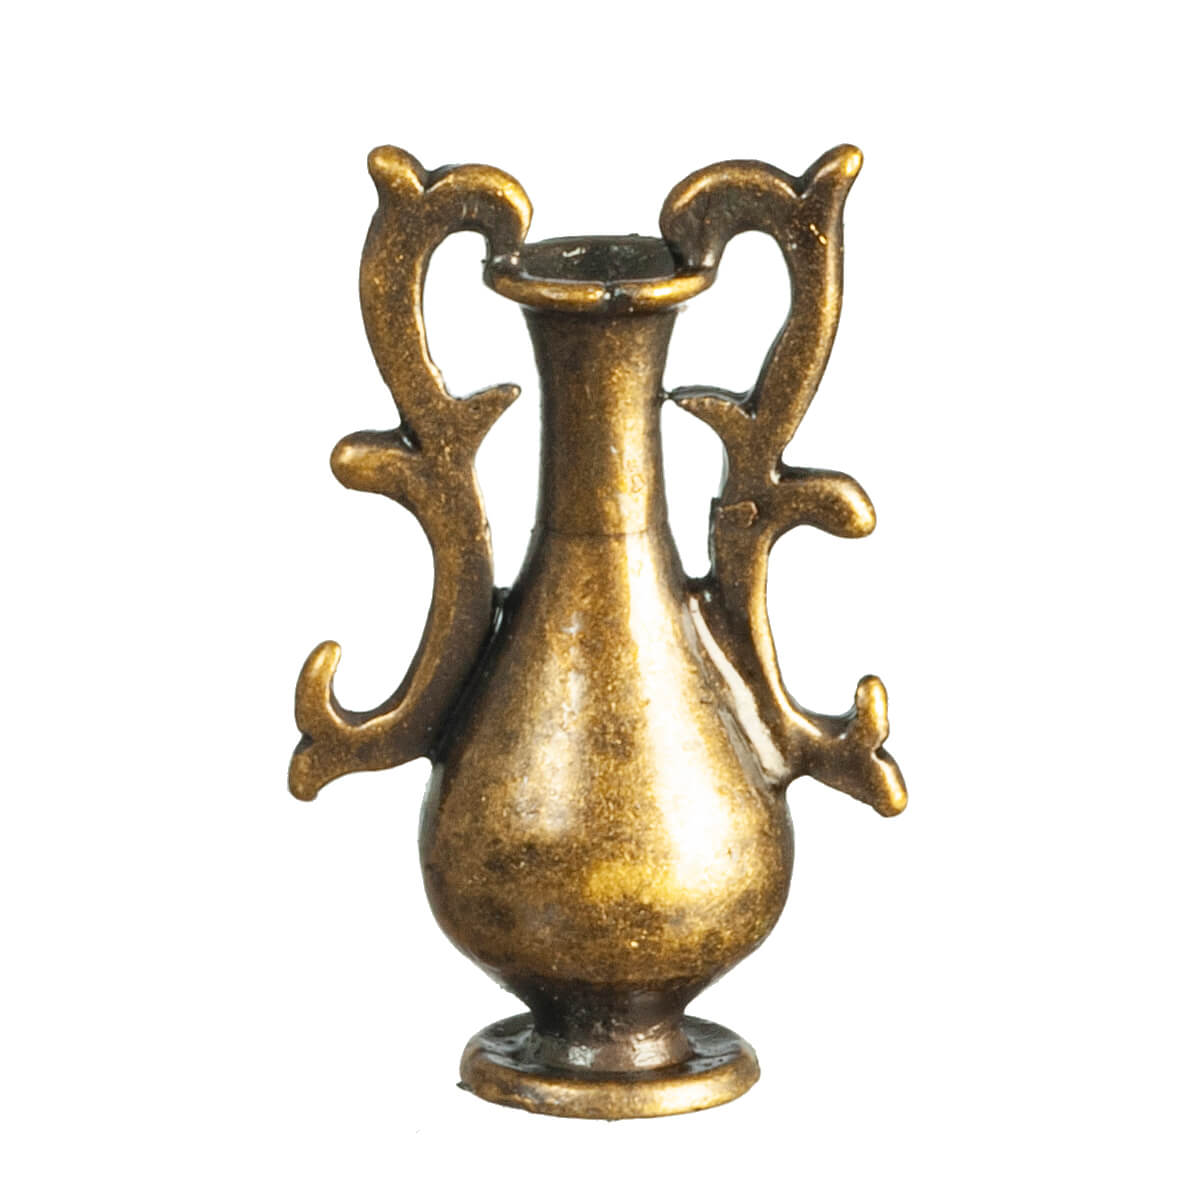 Fancy Handled Vase - Antique Brass 2pc